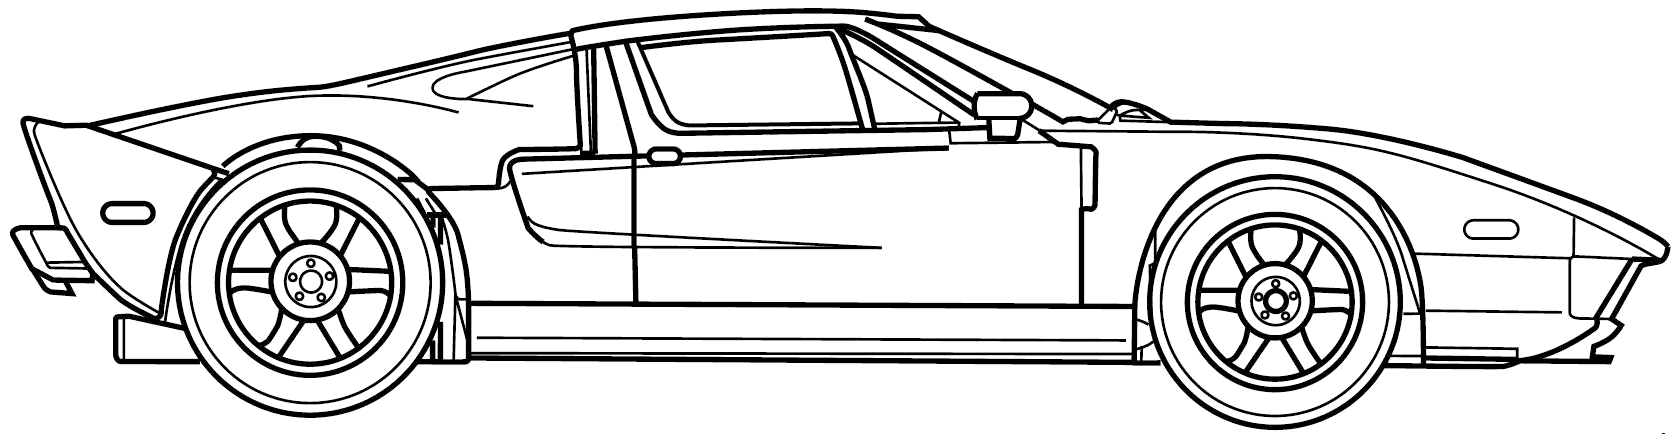 2006 Ford GT Coupe v2 blueprints free - Outlines